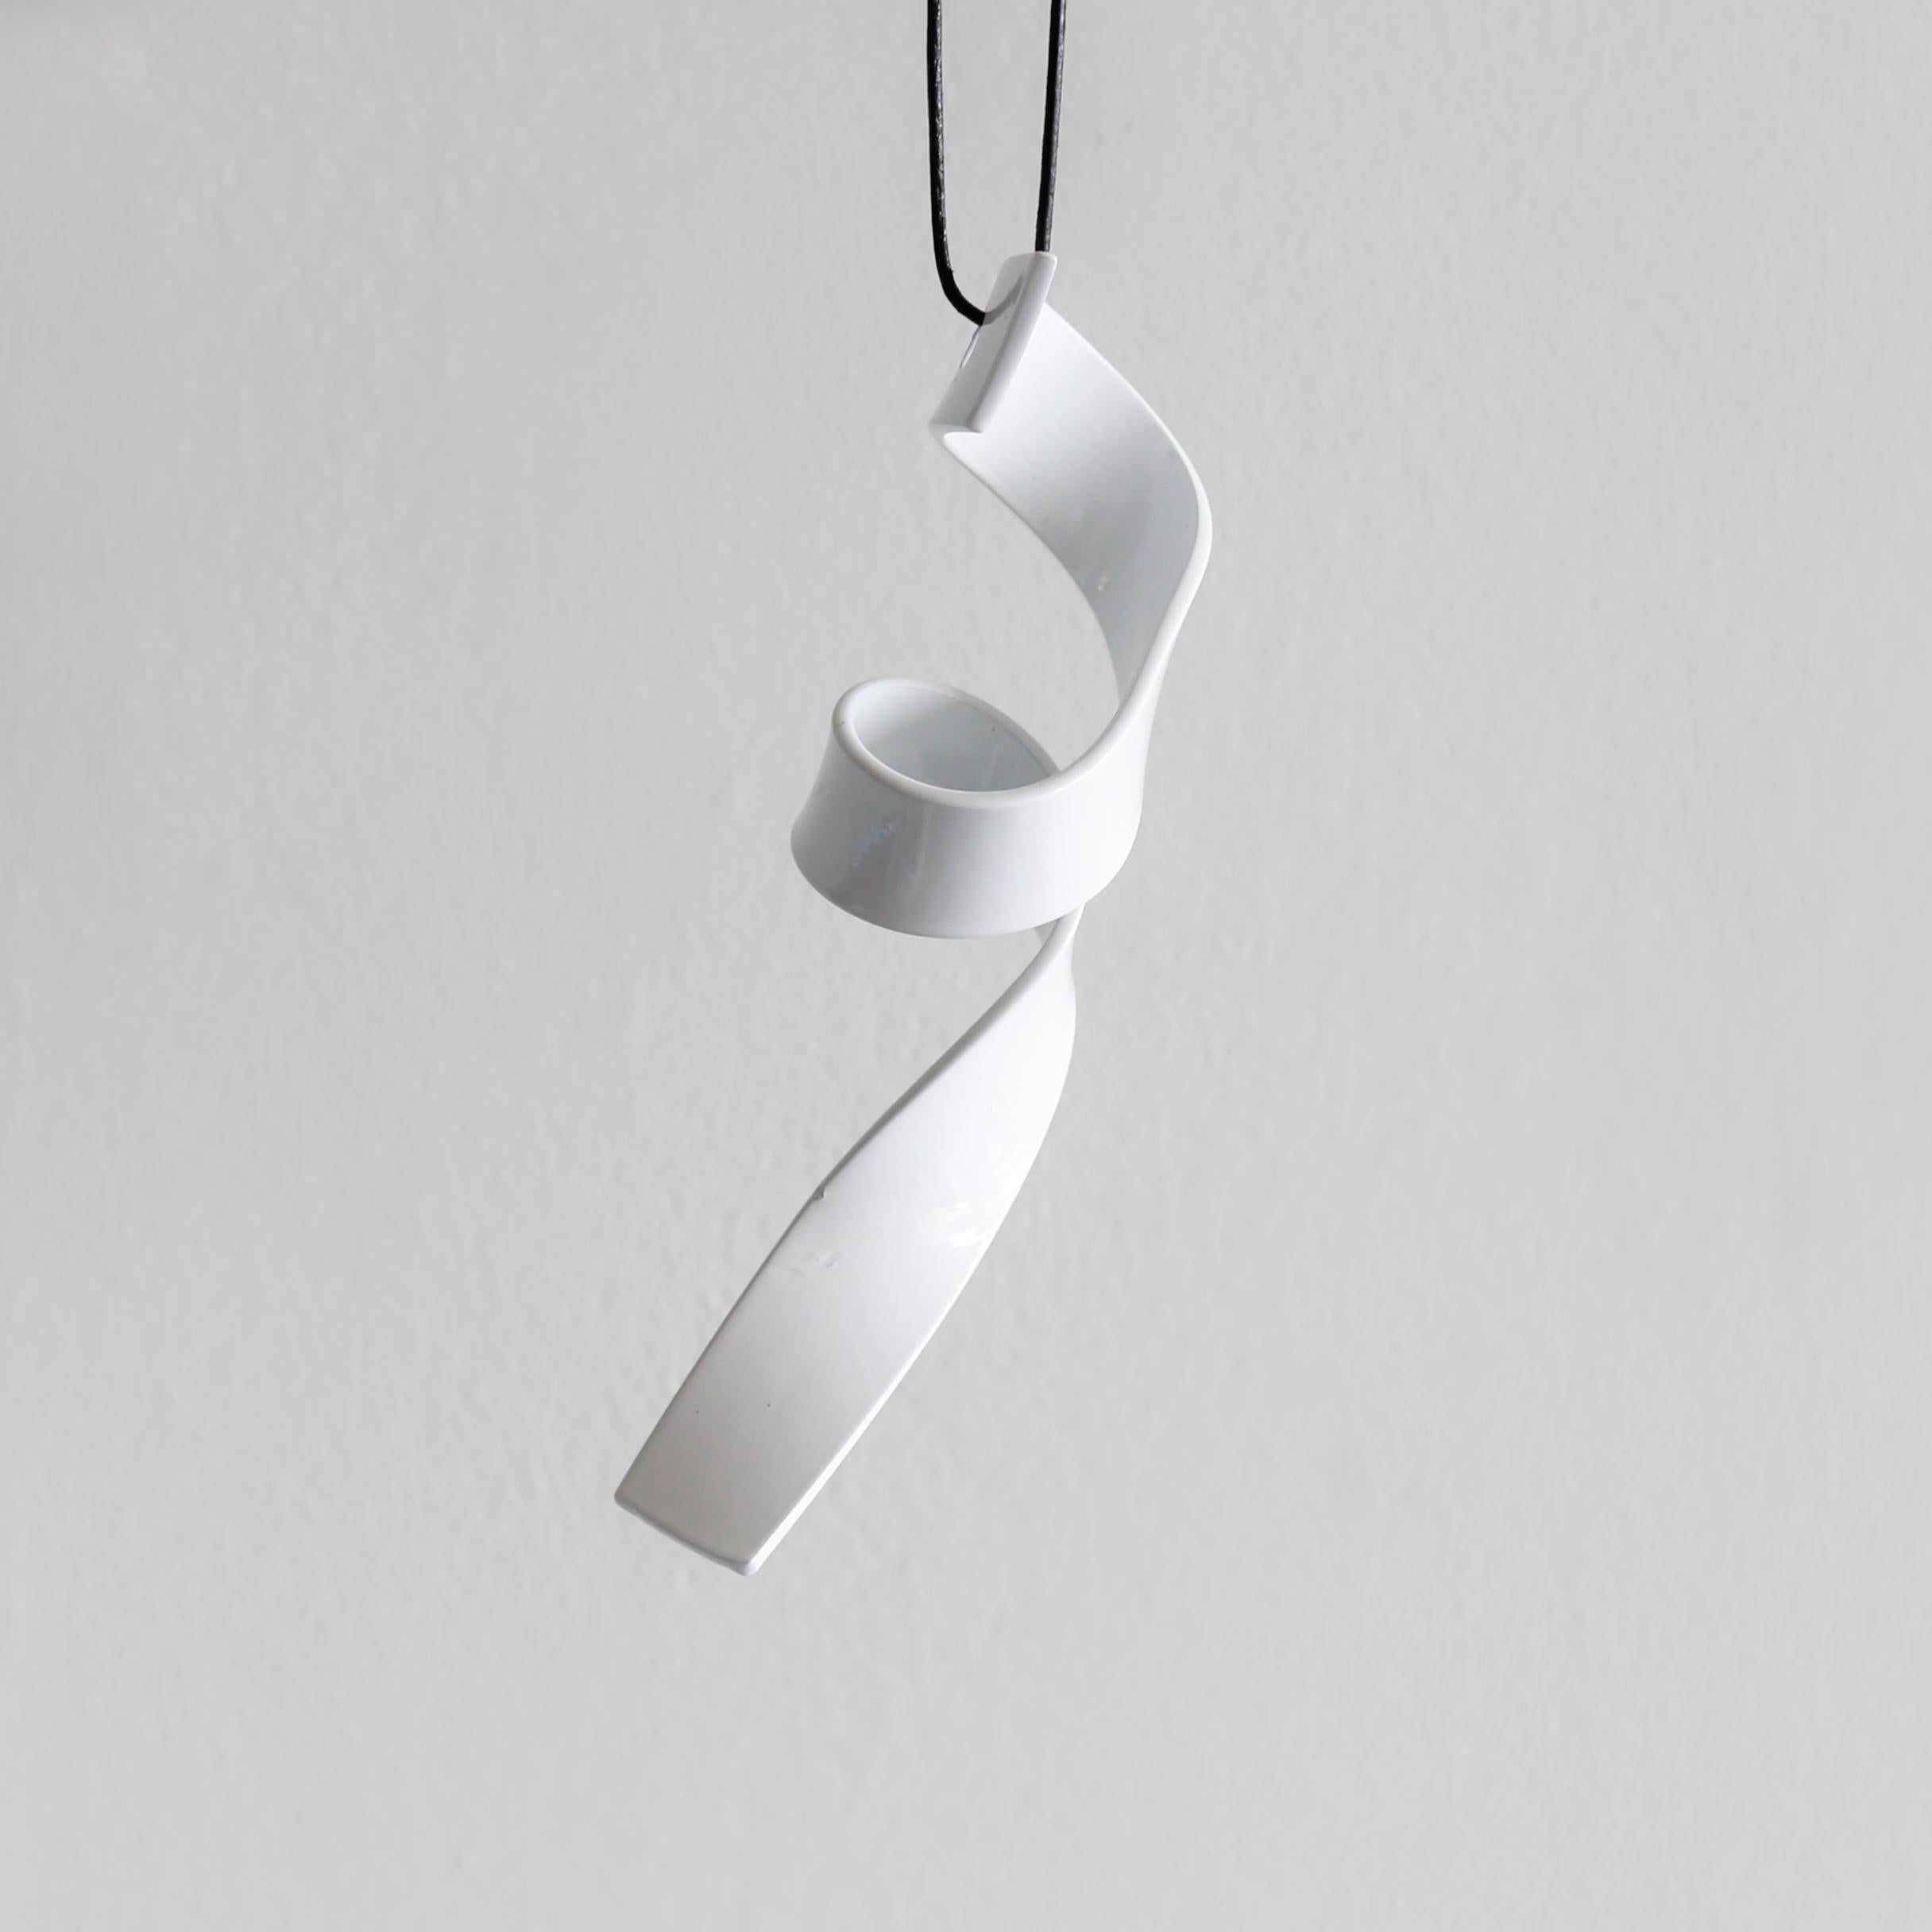 White Ribbon 2 - Sculpture by Morgan Robinson